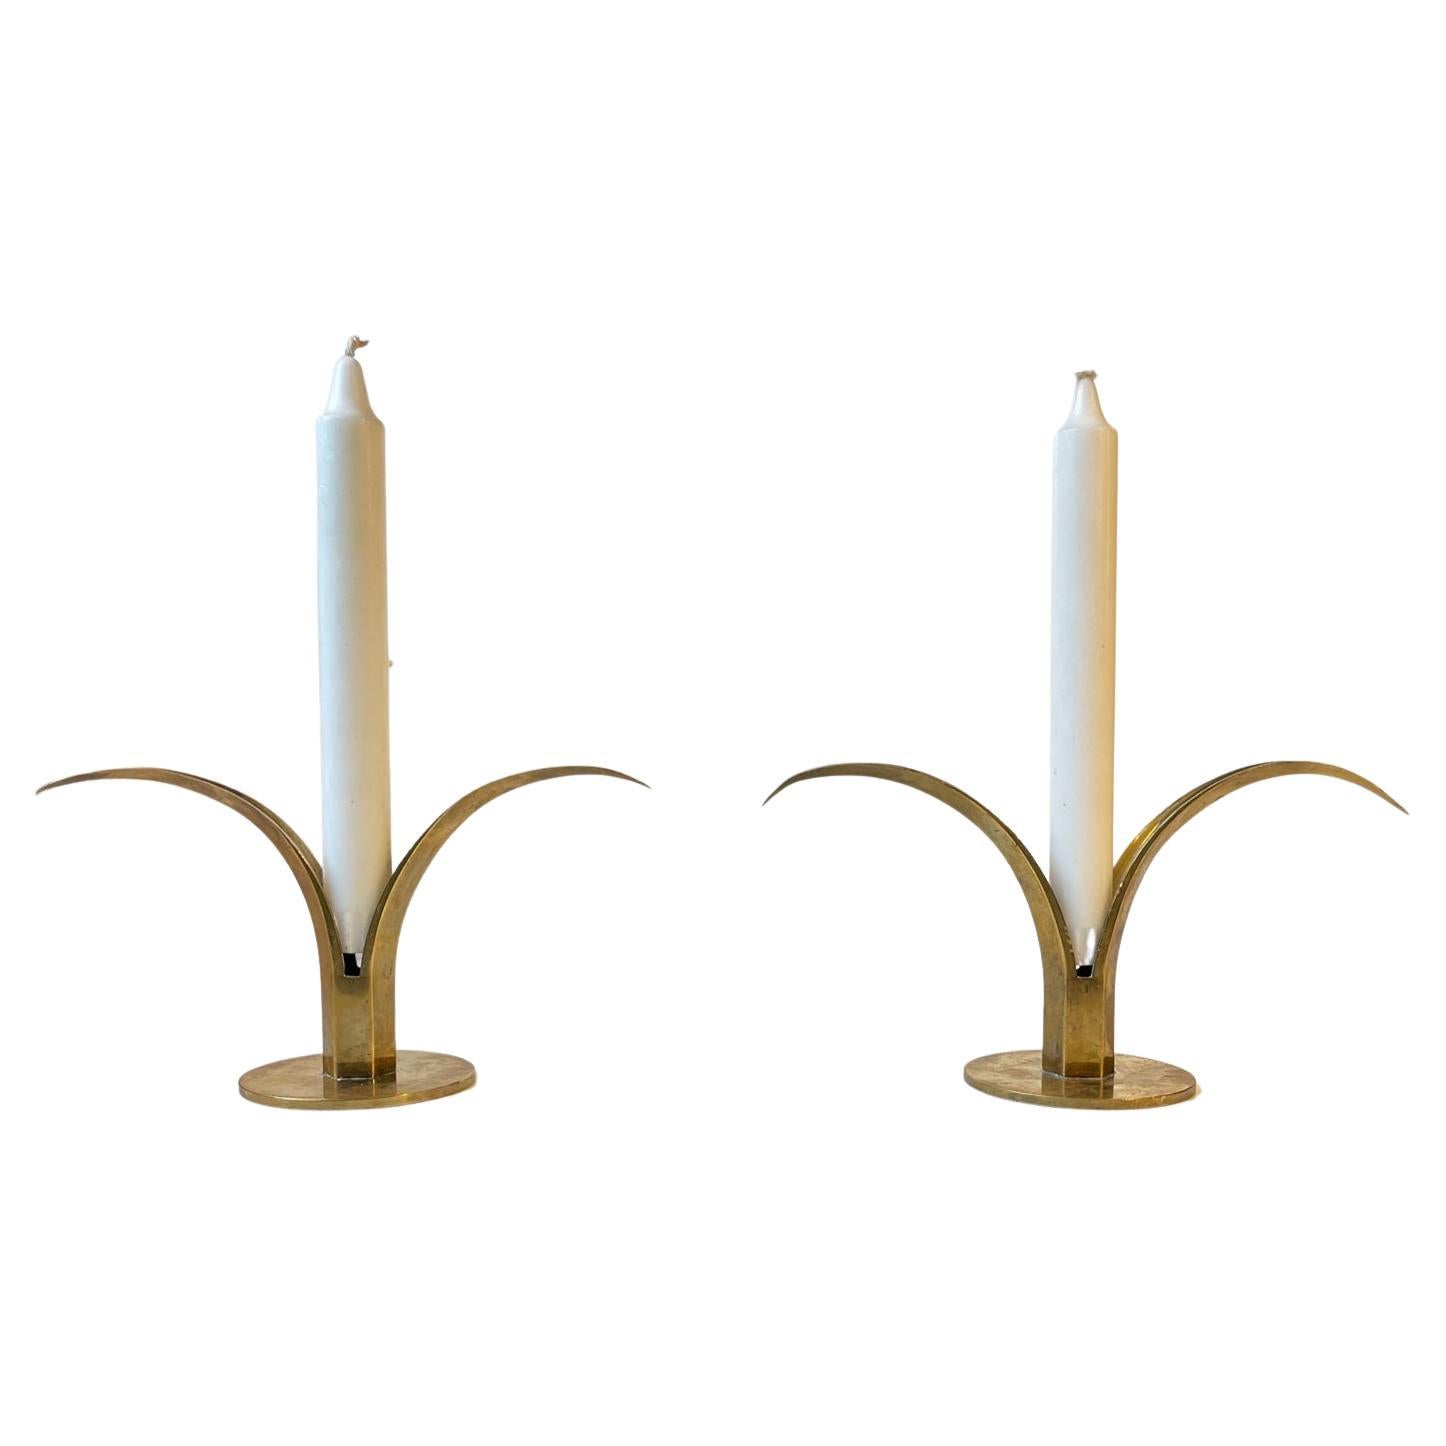 Products Vintage Lily Candlesticks in Brass by Ivar Ålenius Björk, 1950s